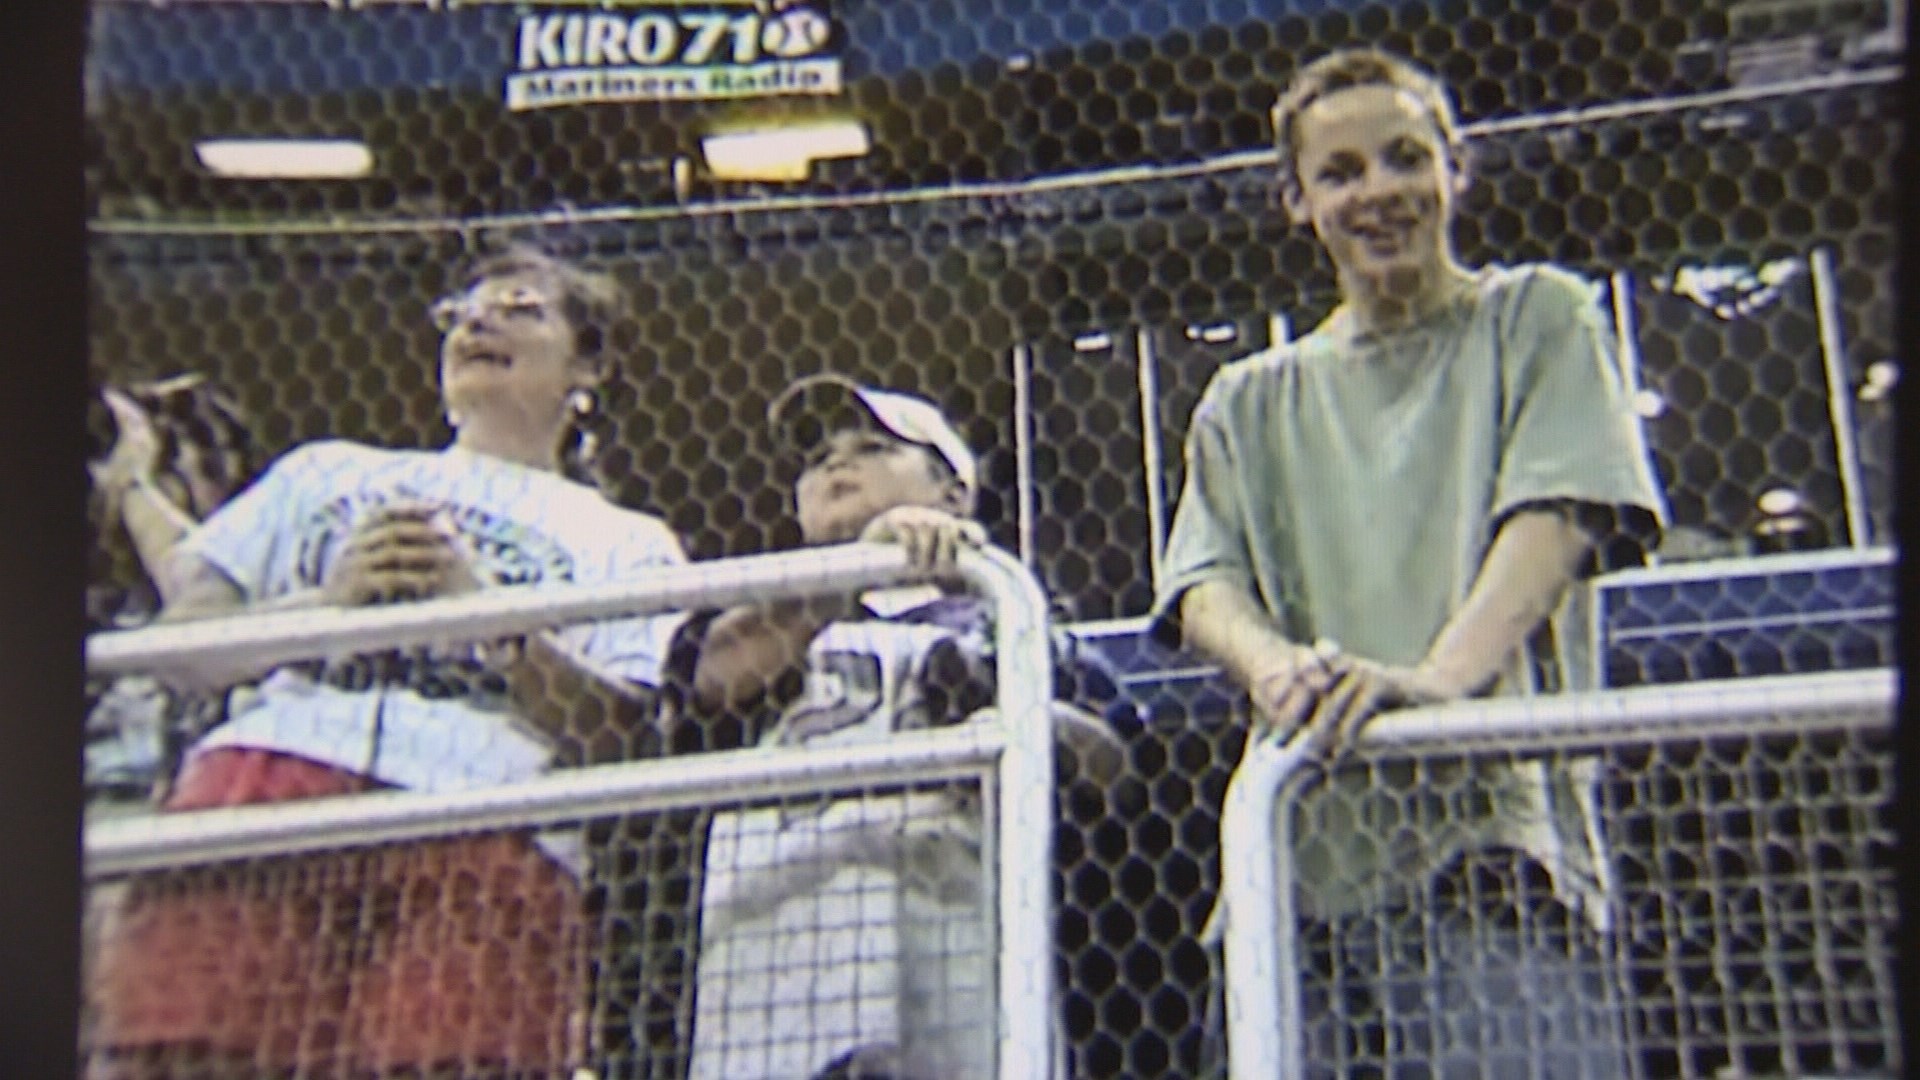 MLB News: Fans go crazy as Seattle hero Ken Griffey, Jr. snaps